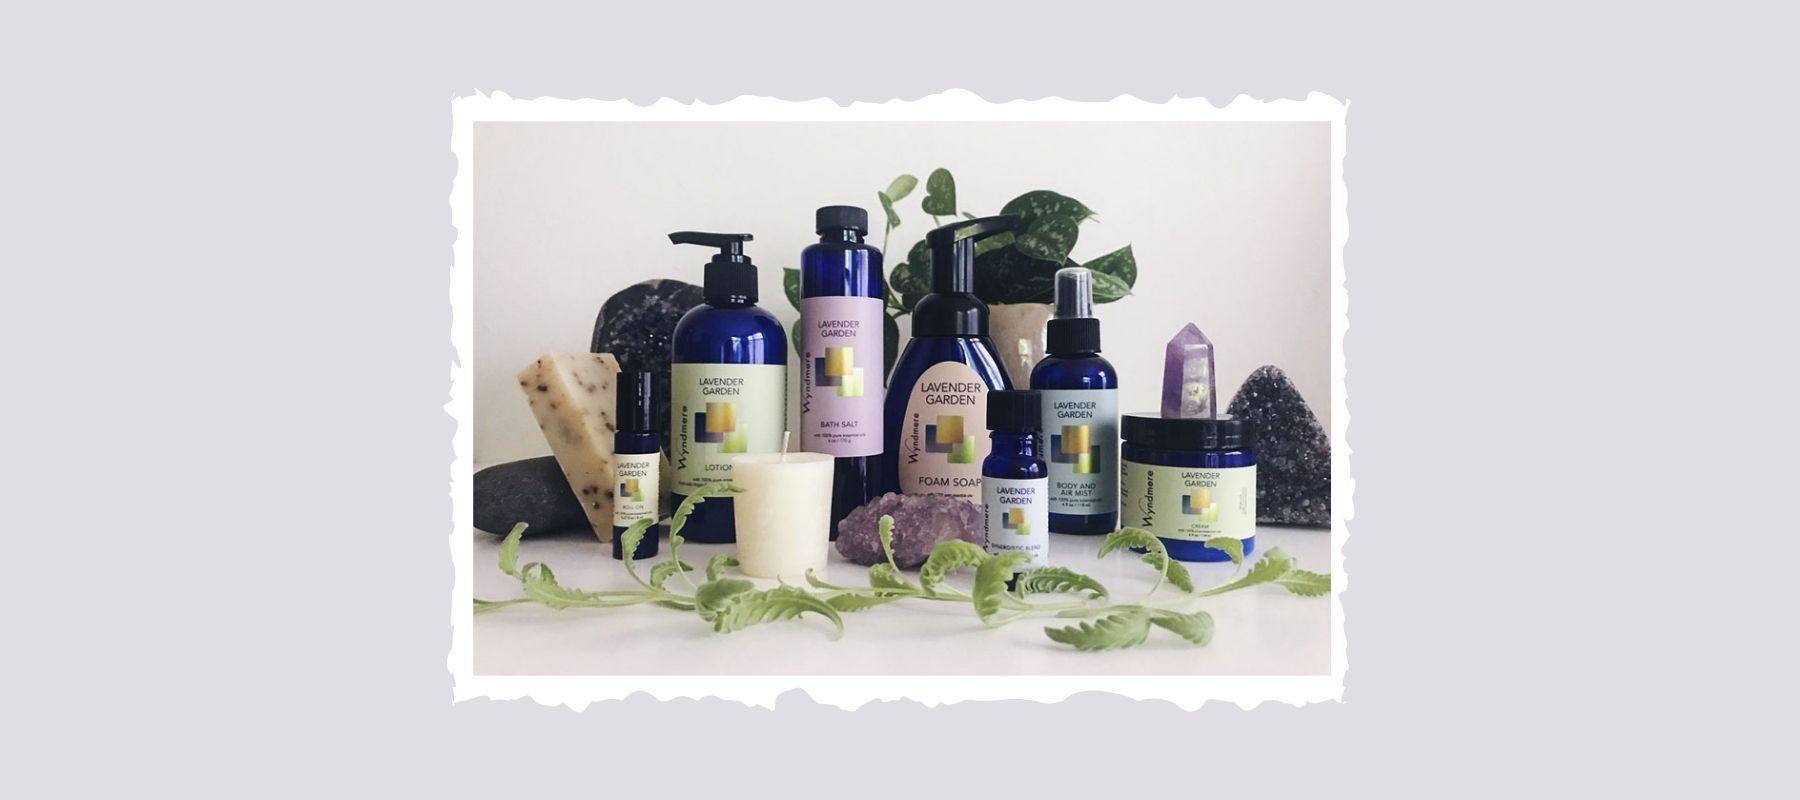 Wyndmere products with Lavender Garden blend